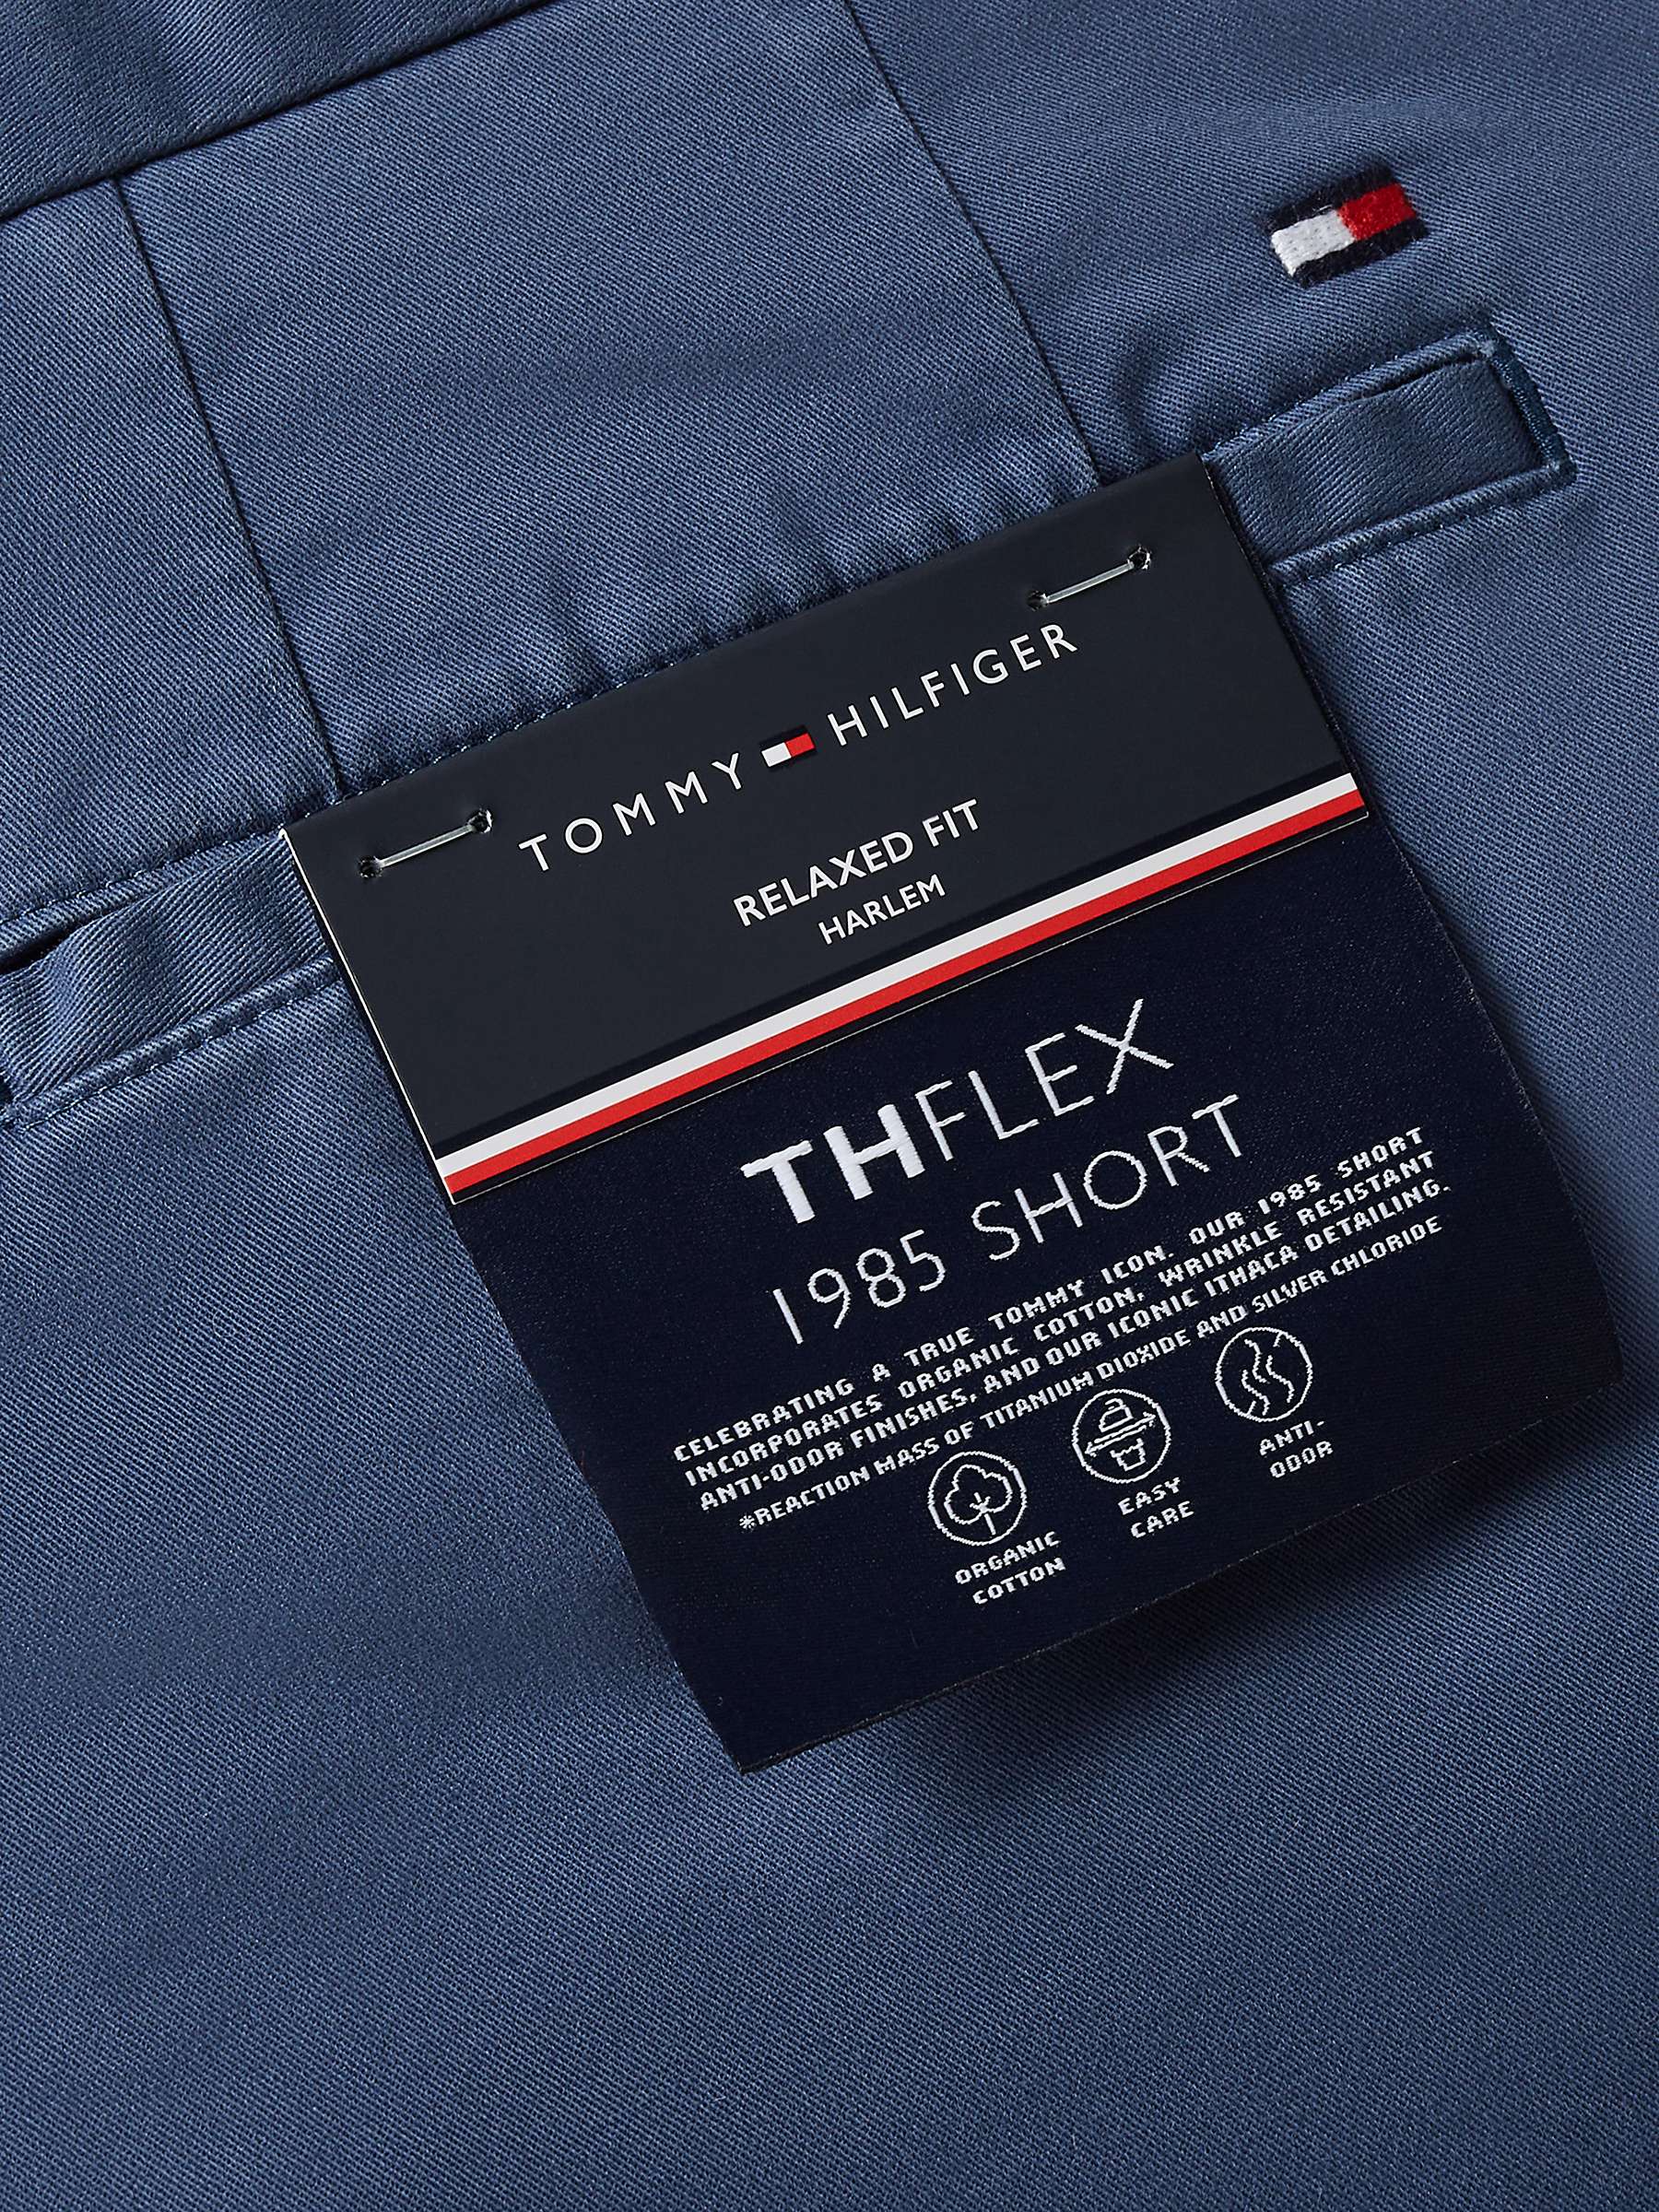 Buy Tommy Hilfiger Harlem Chino Shorts, Aegean Sea Online at johnlewis.com